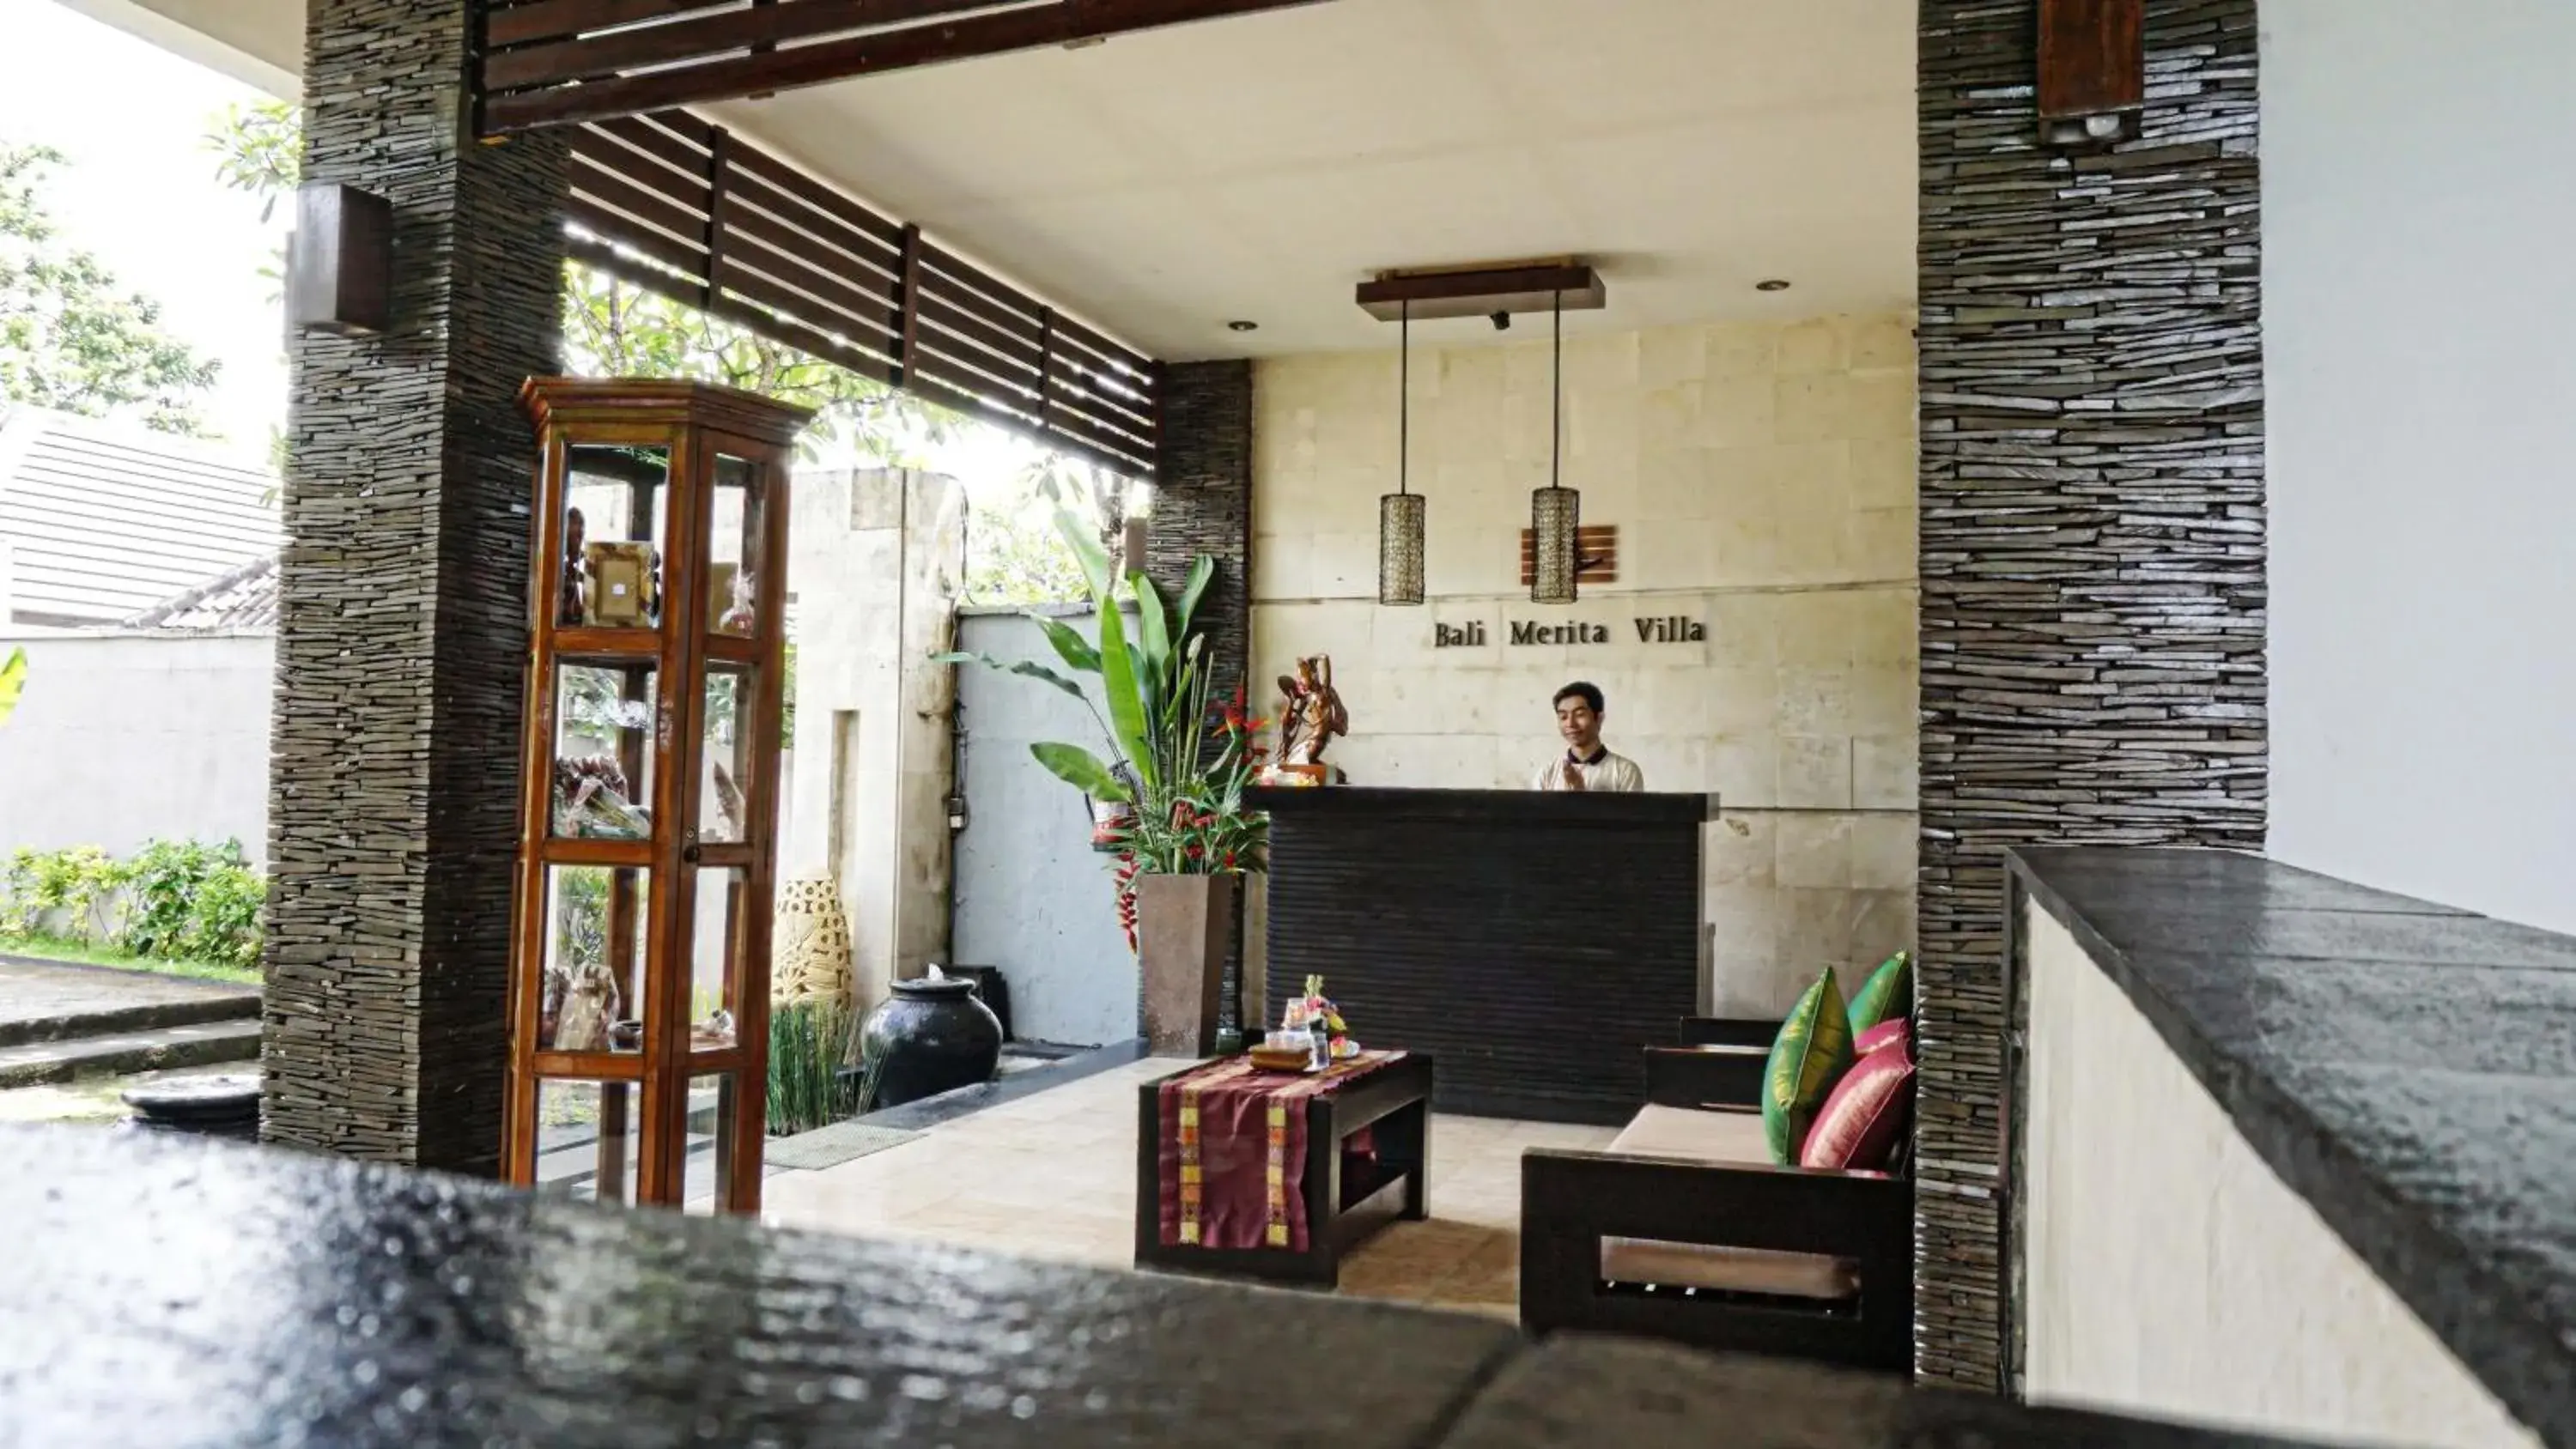 Lobby or reception in Bali Merita Villa